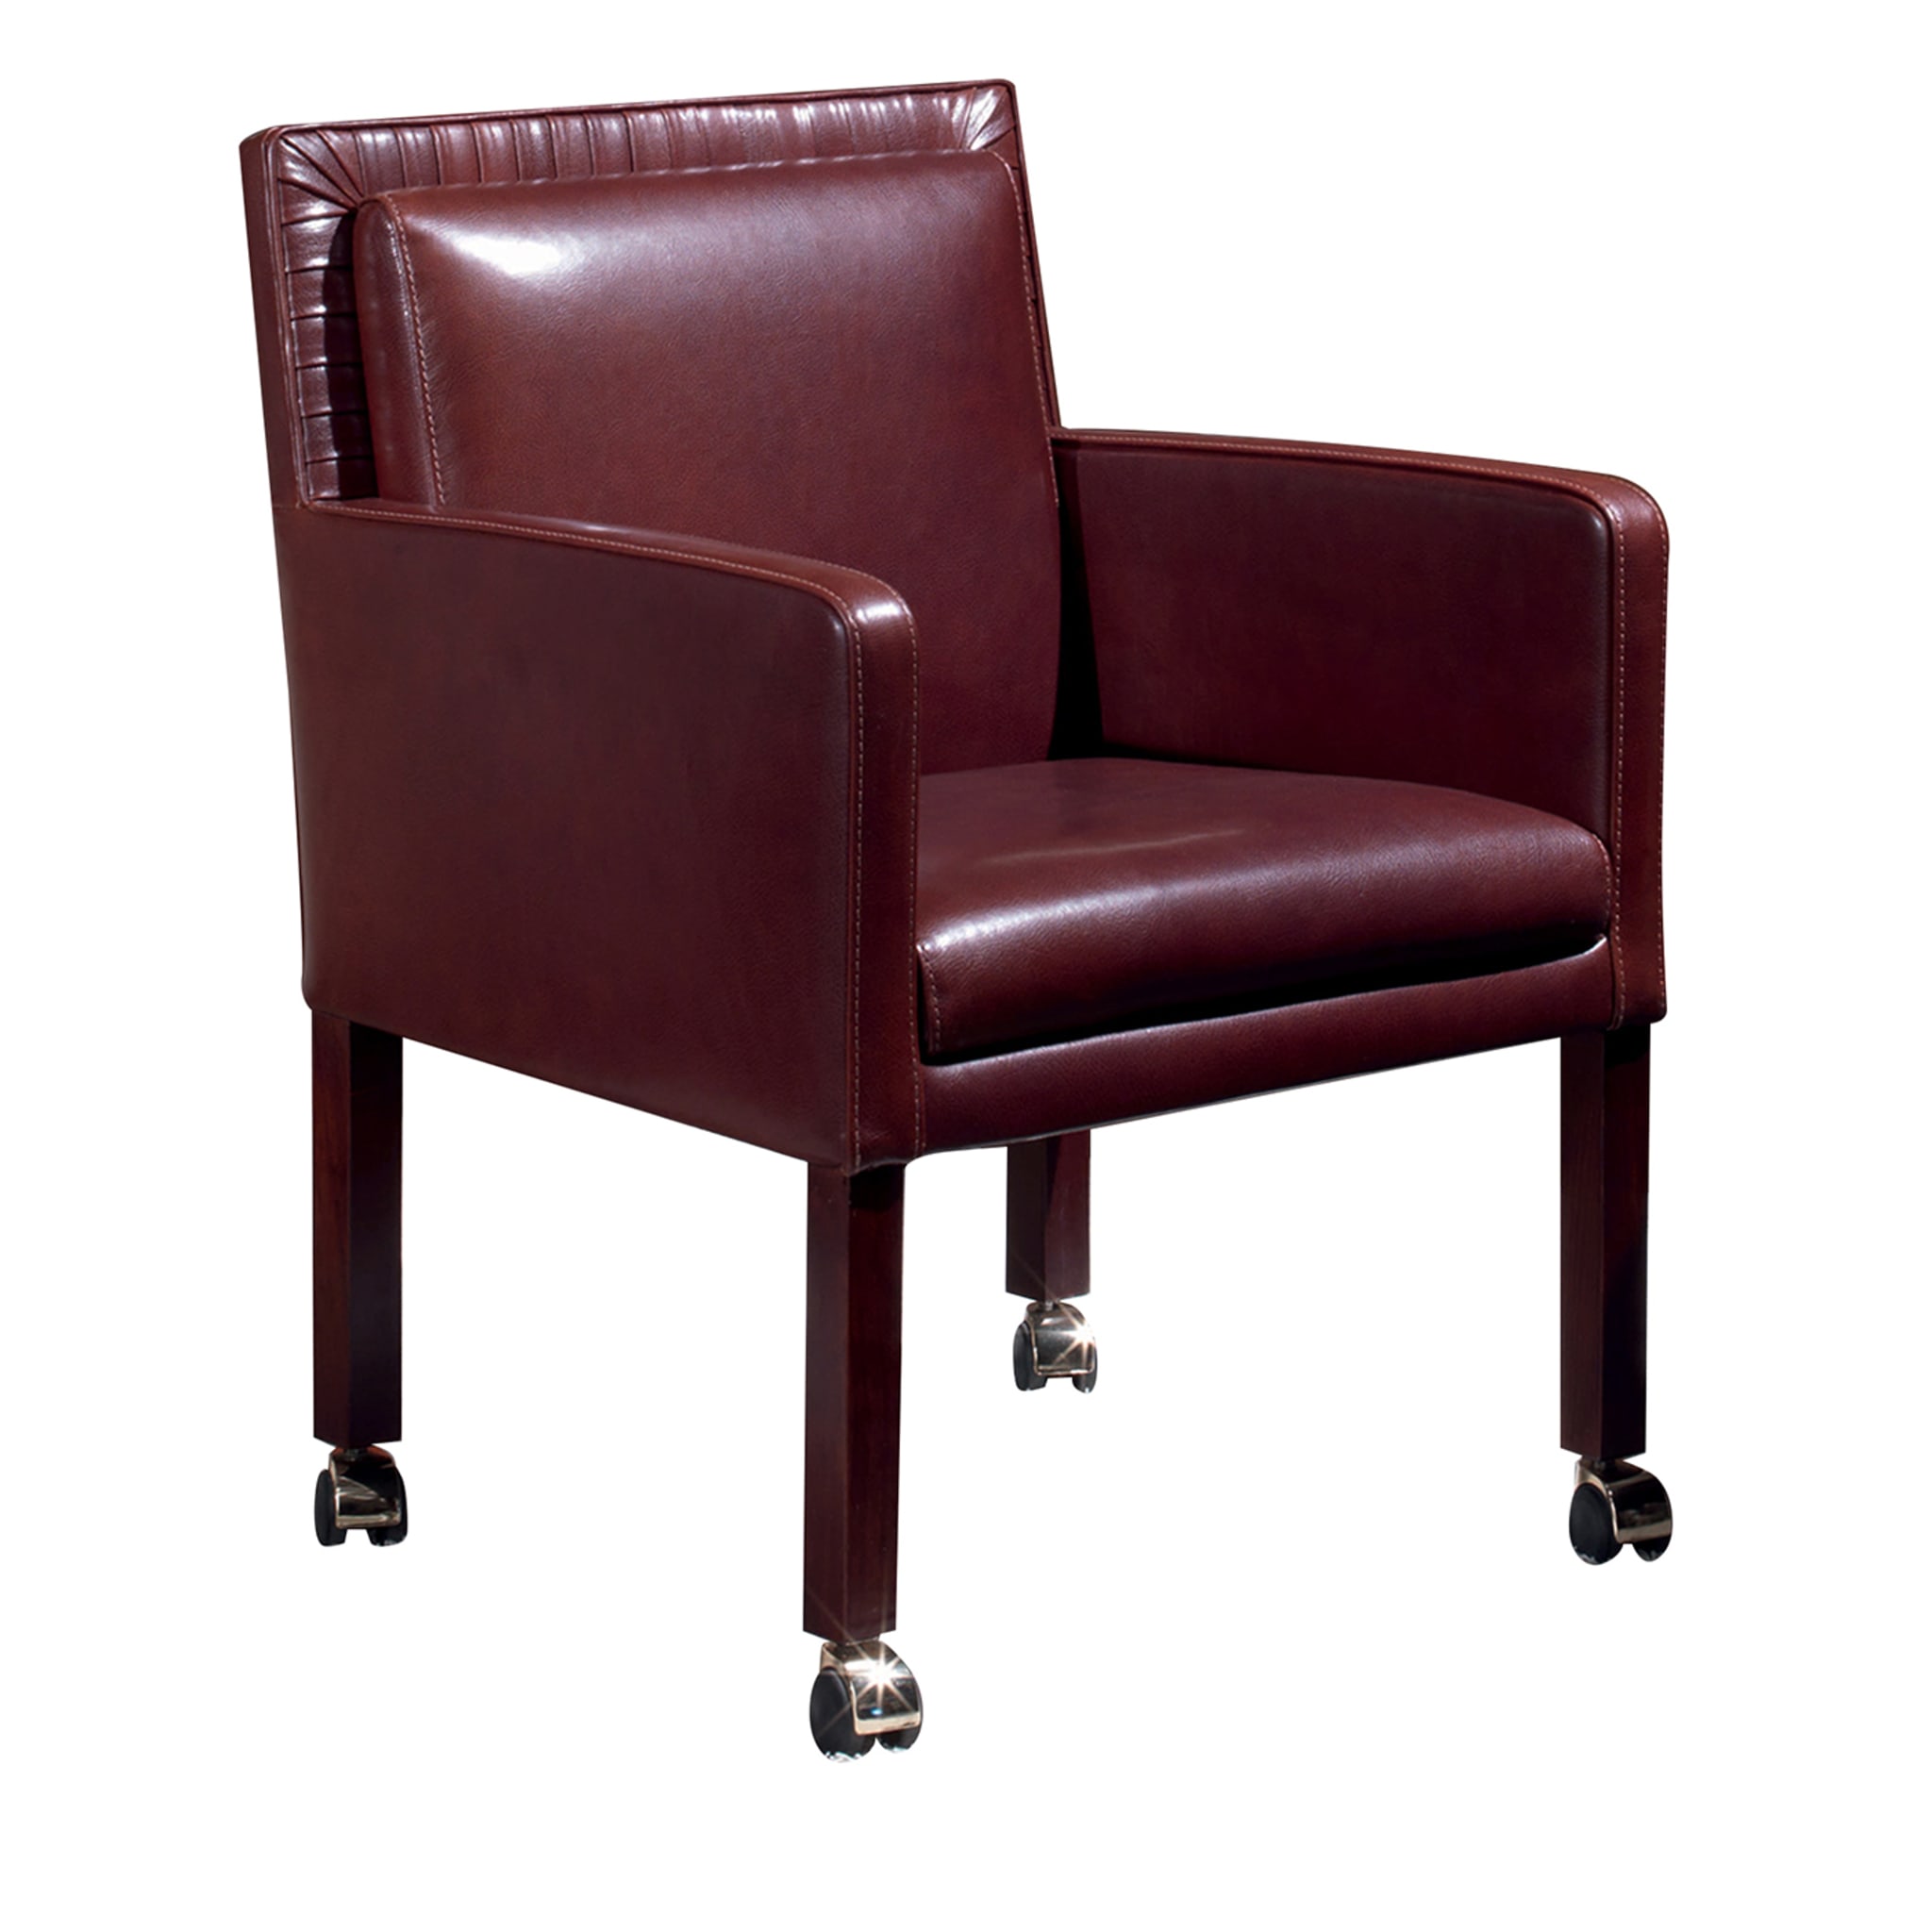 Burgundy Leather Armchair - Main view